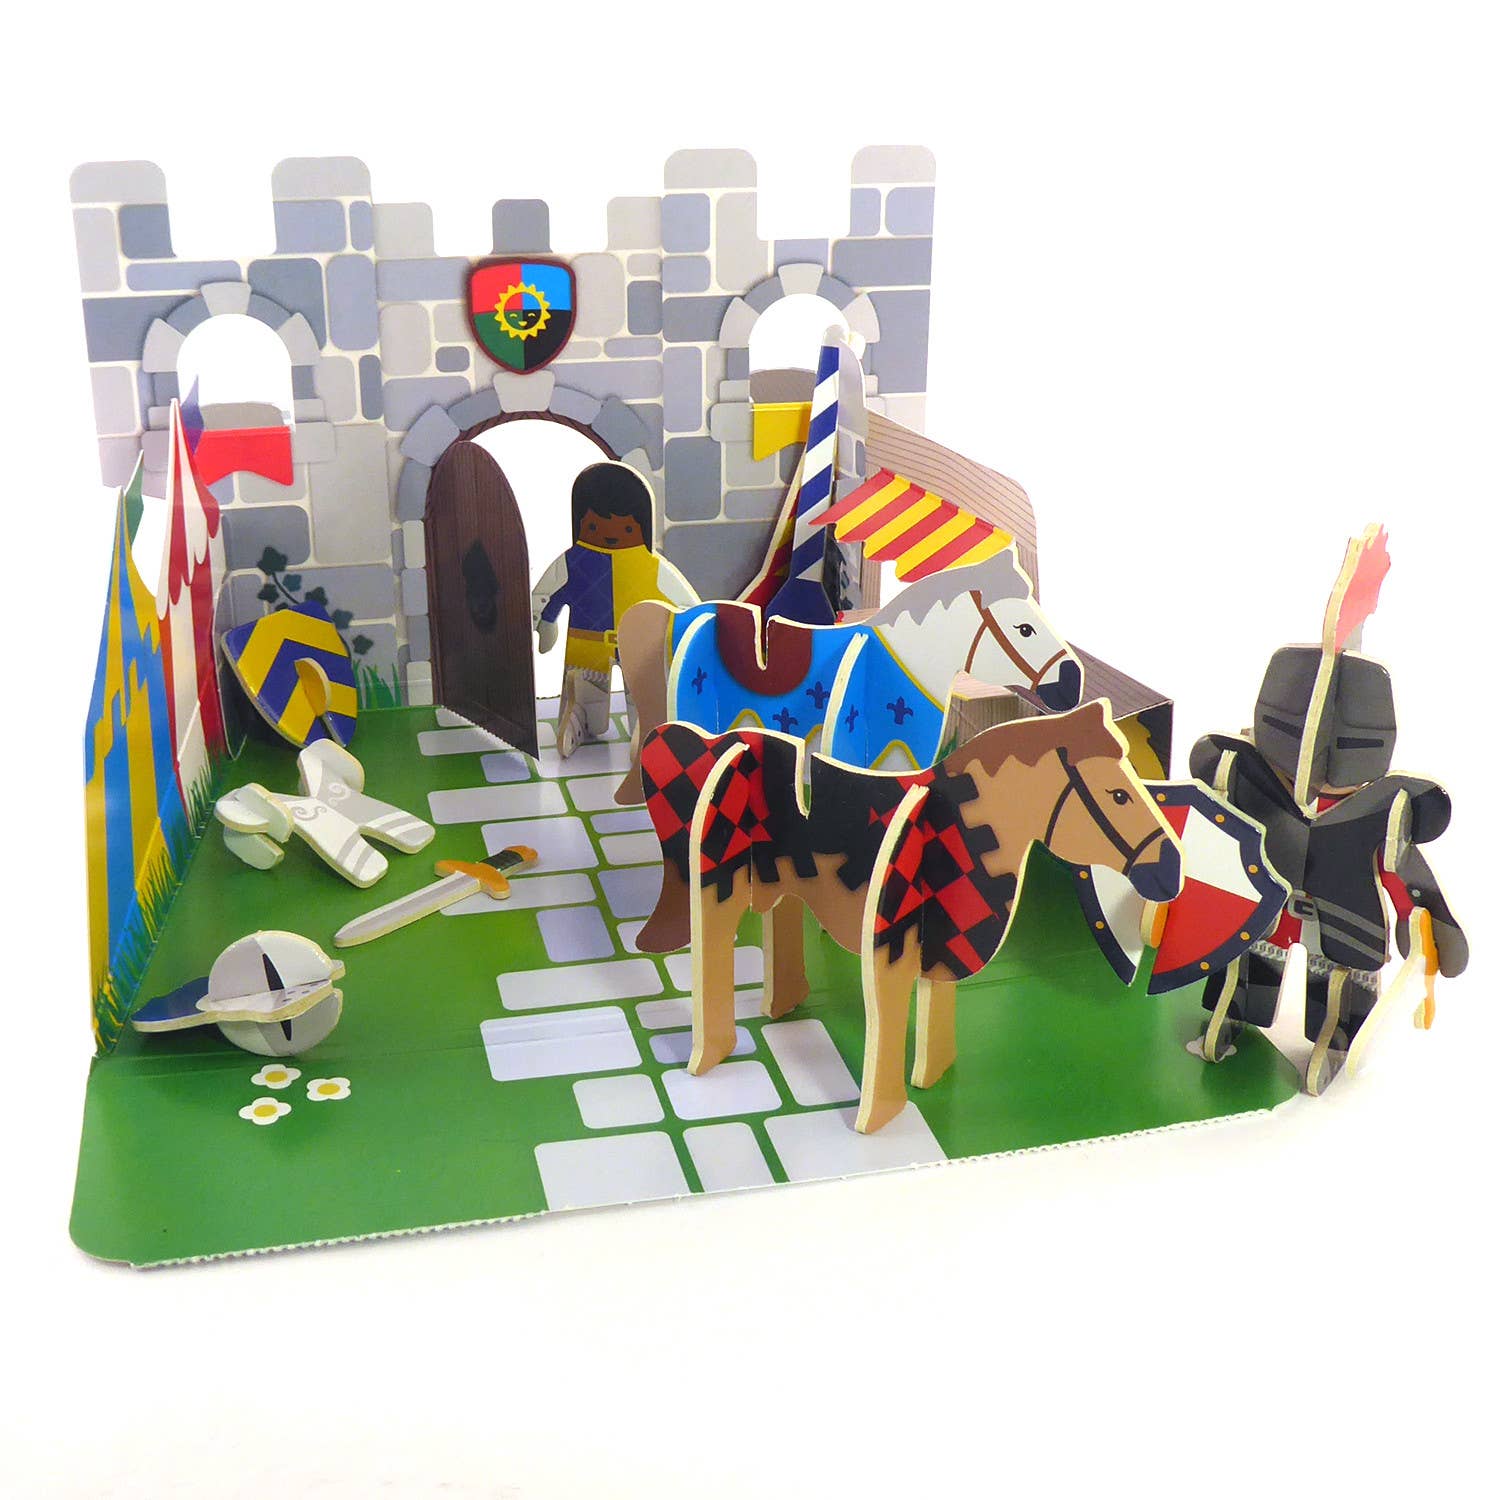 Playset Castello dei Cavalieri da montare - PlayPress Toys - Pipapù